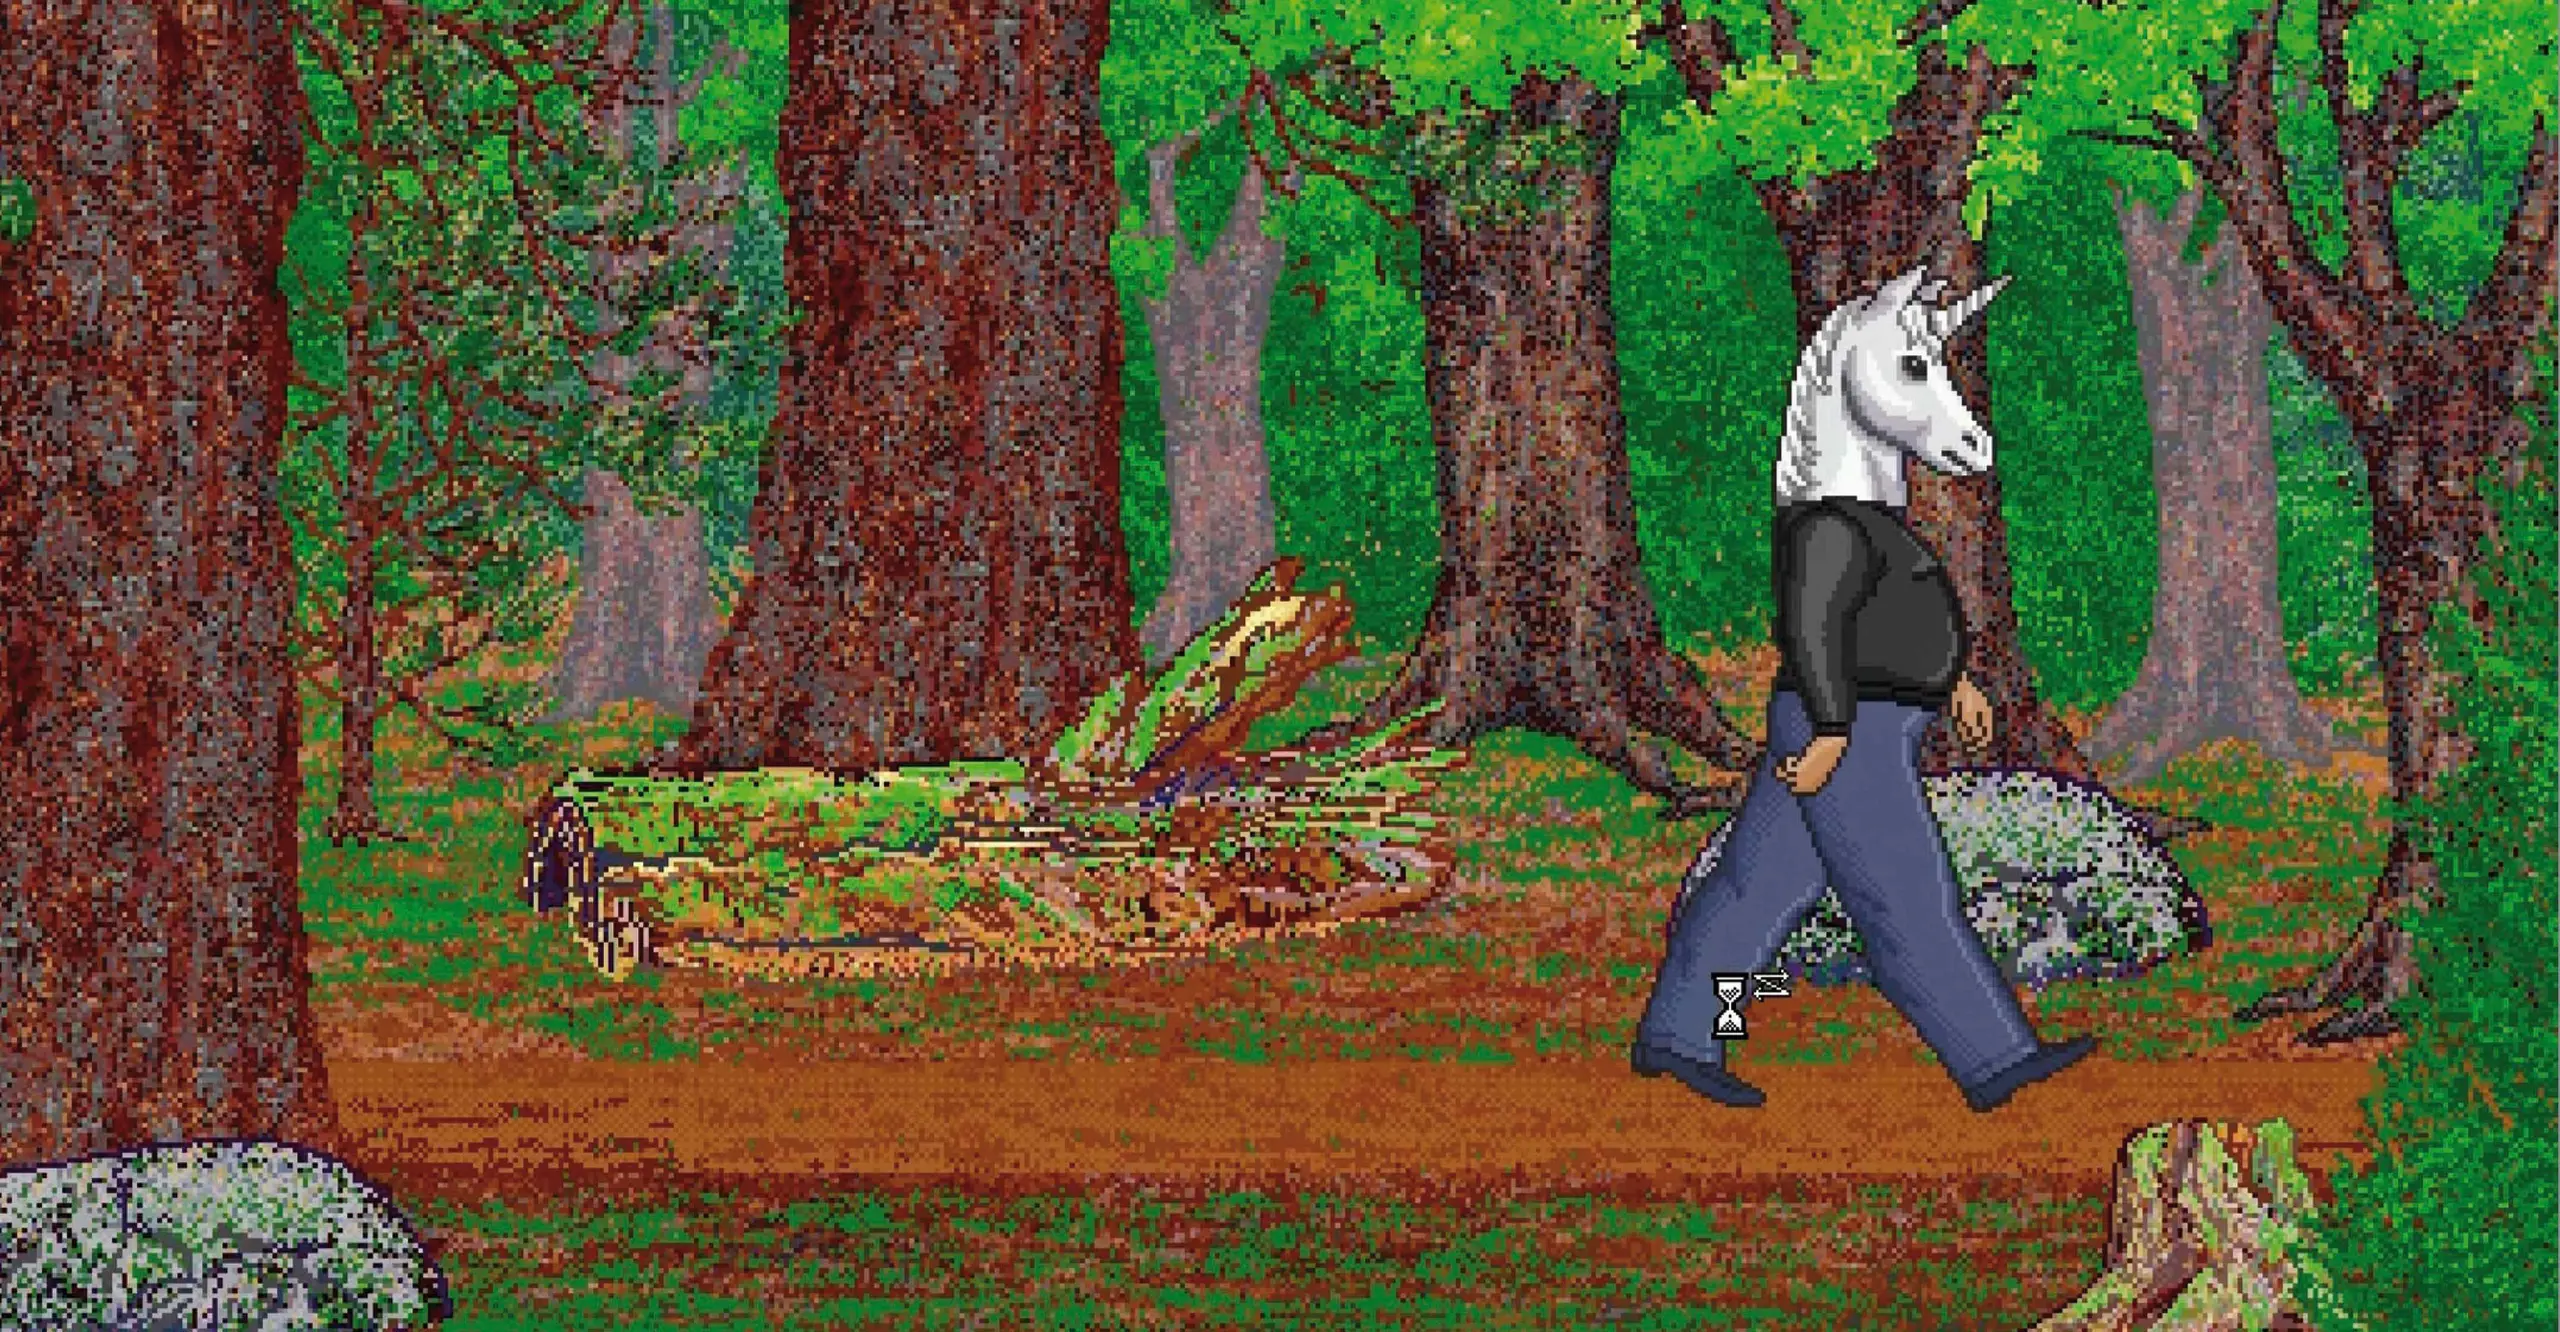 A digital unicorn in human clothes walks along a 2D digital forest landscape